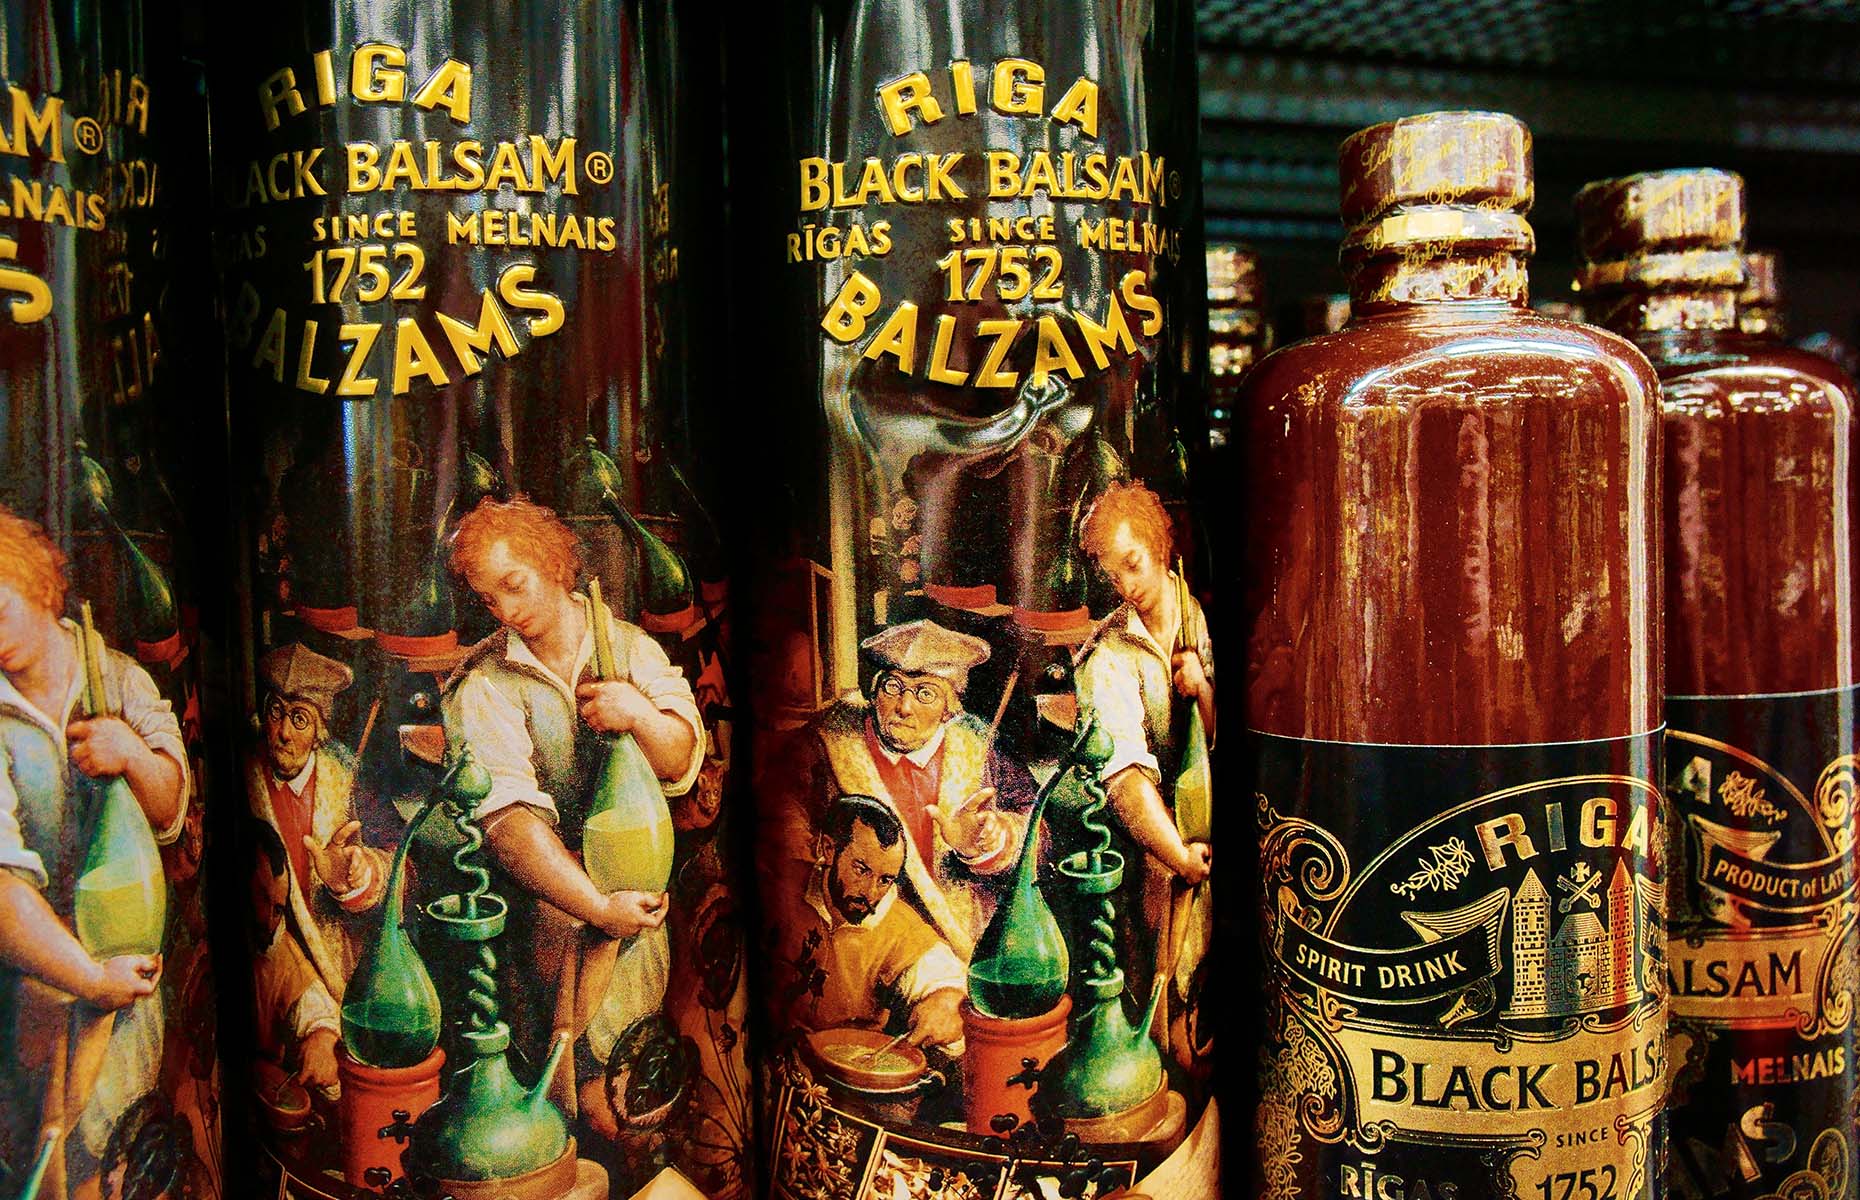 Riga Black Balsam (Image: David Lyons/Alamy Stock Photo)